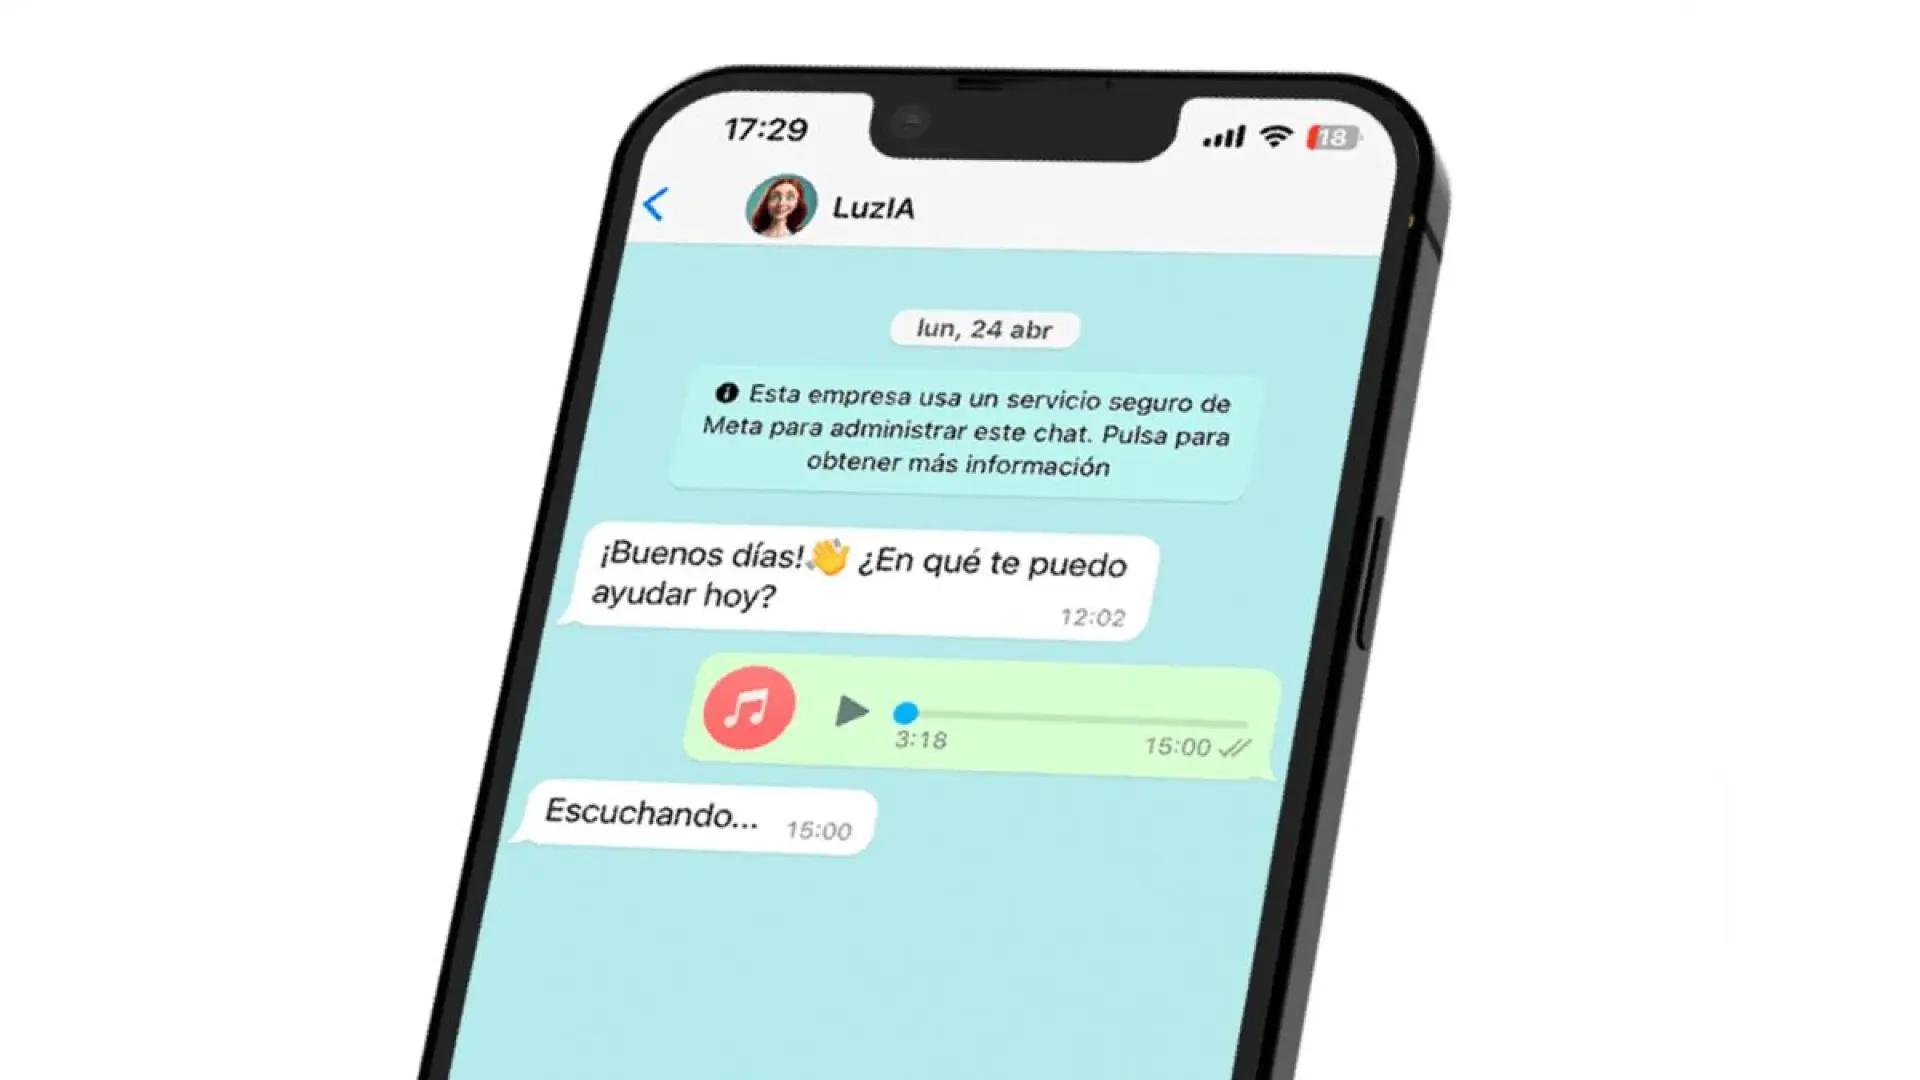 luzia inteligencia artificial whatsapp - Qué es LuzIA WhatsApp